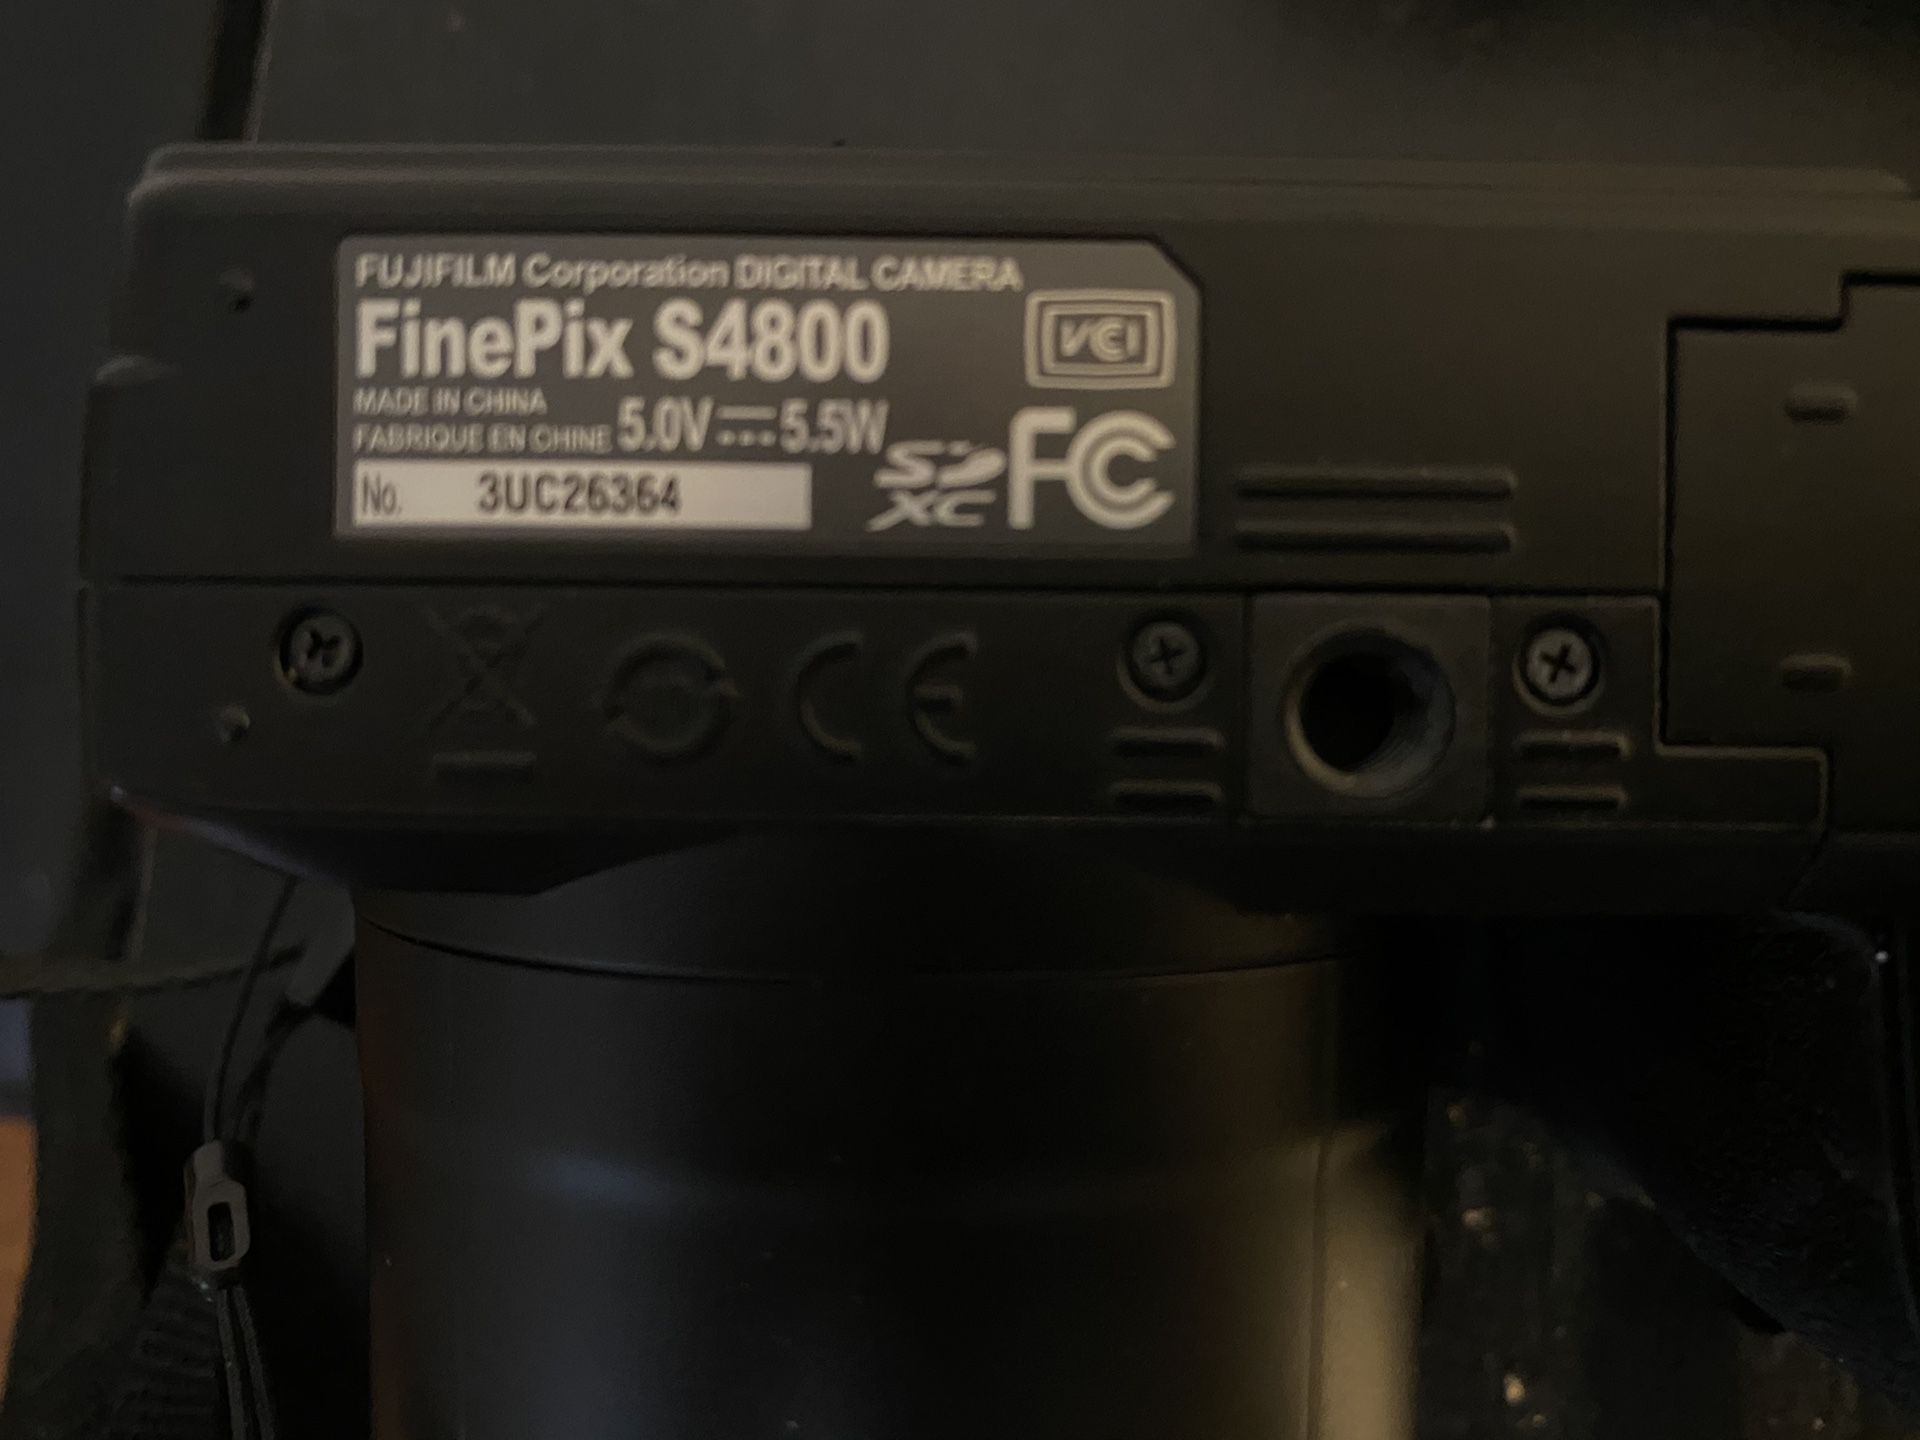 Fujifilm Digital Camera FinePix S4800